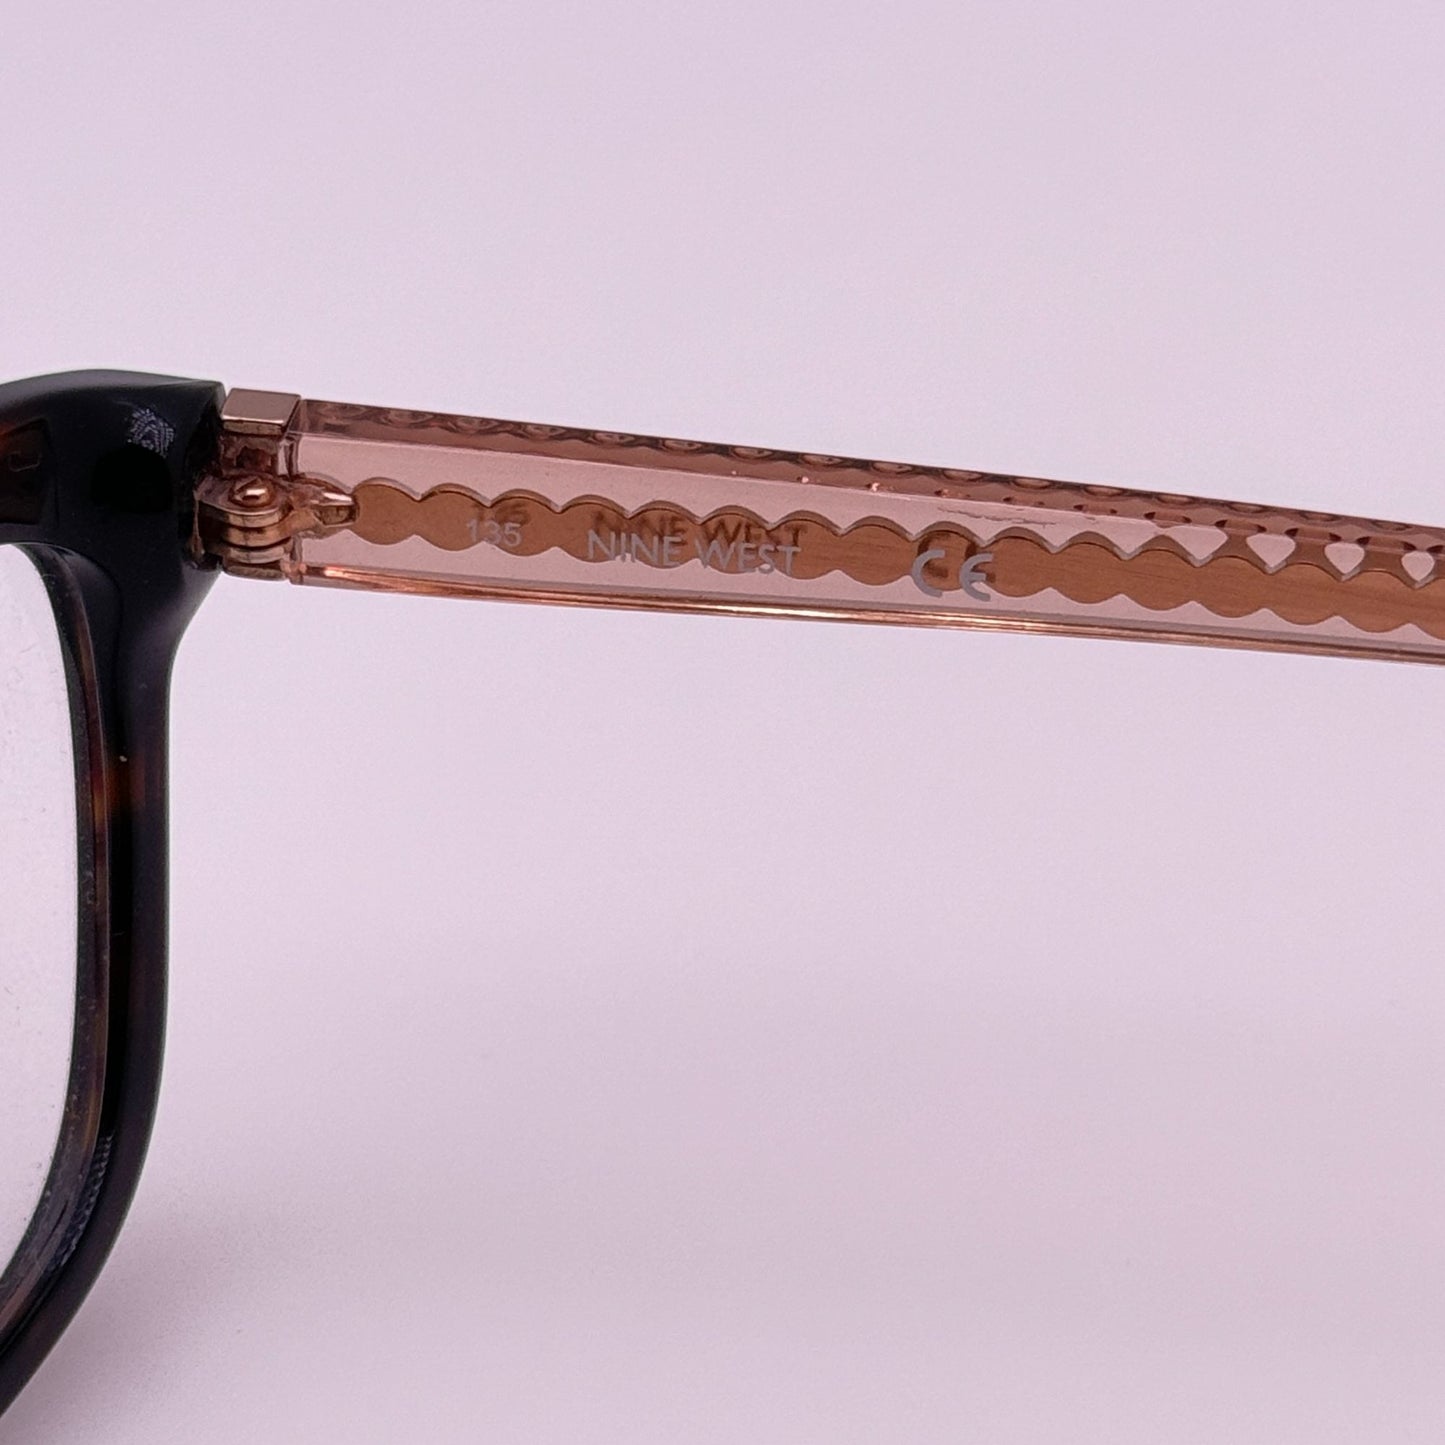 Nine West Eyeglasses Eye Glasses Frames NW5086 206 52-16-135